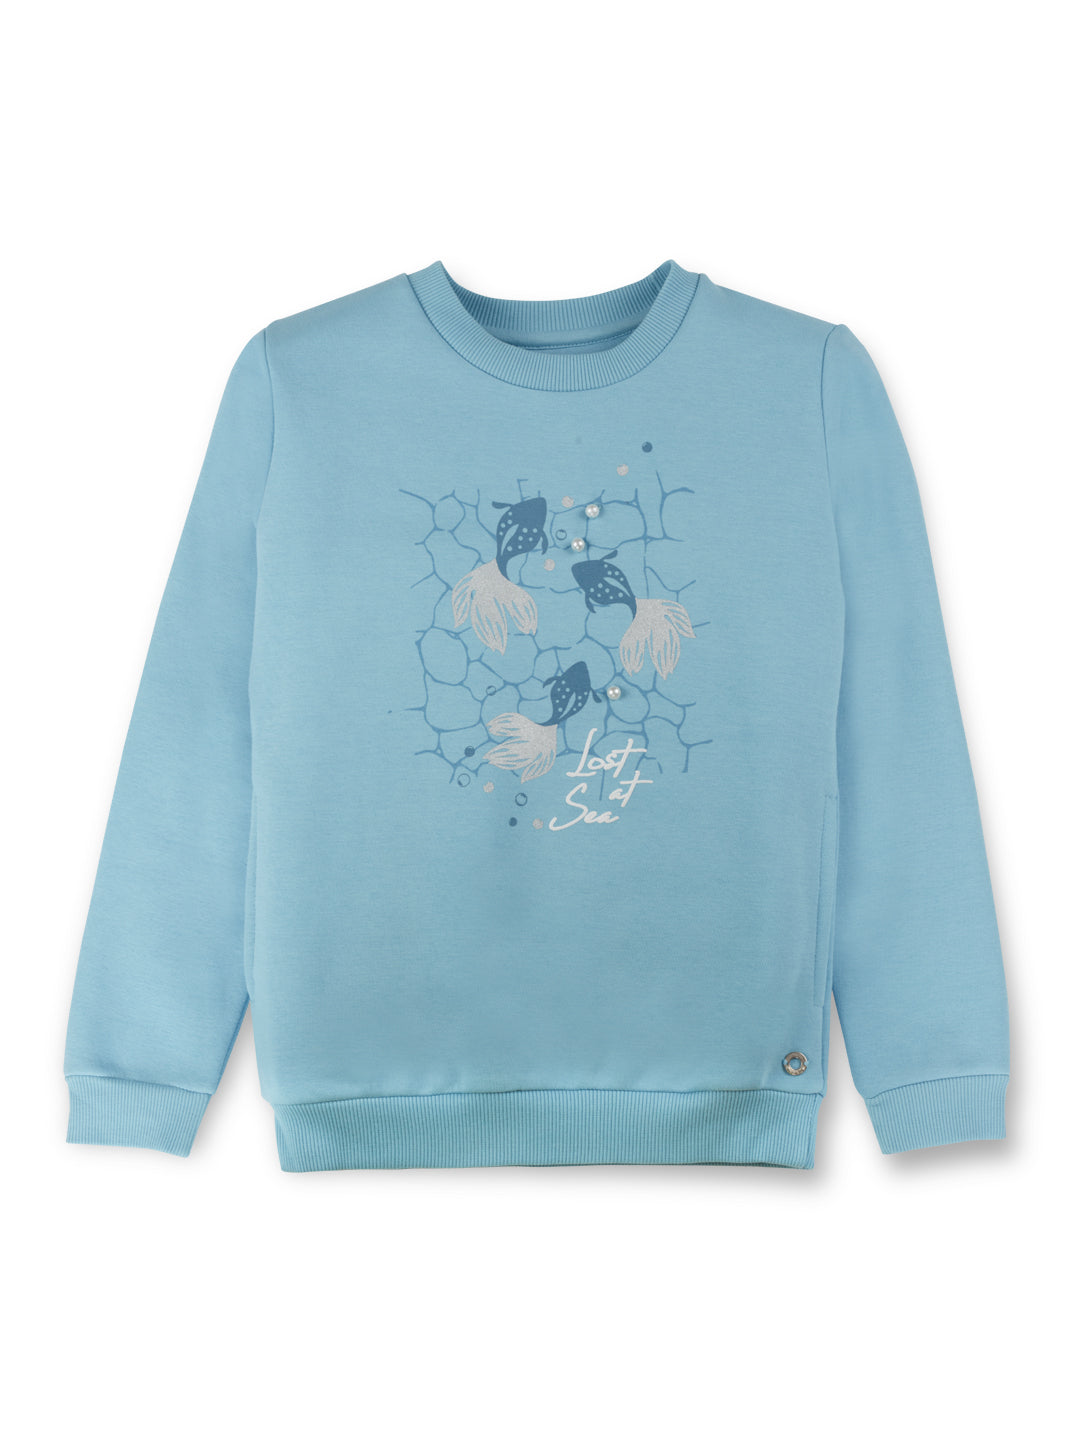 Girls blue printed sweatshirt